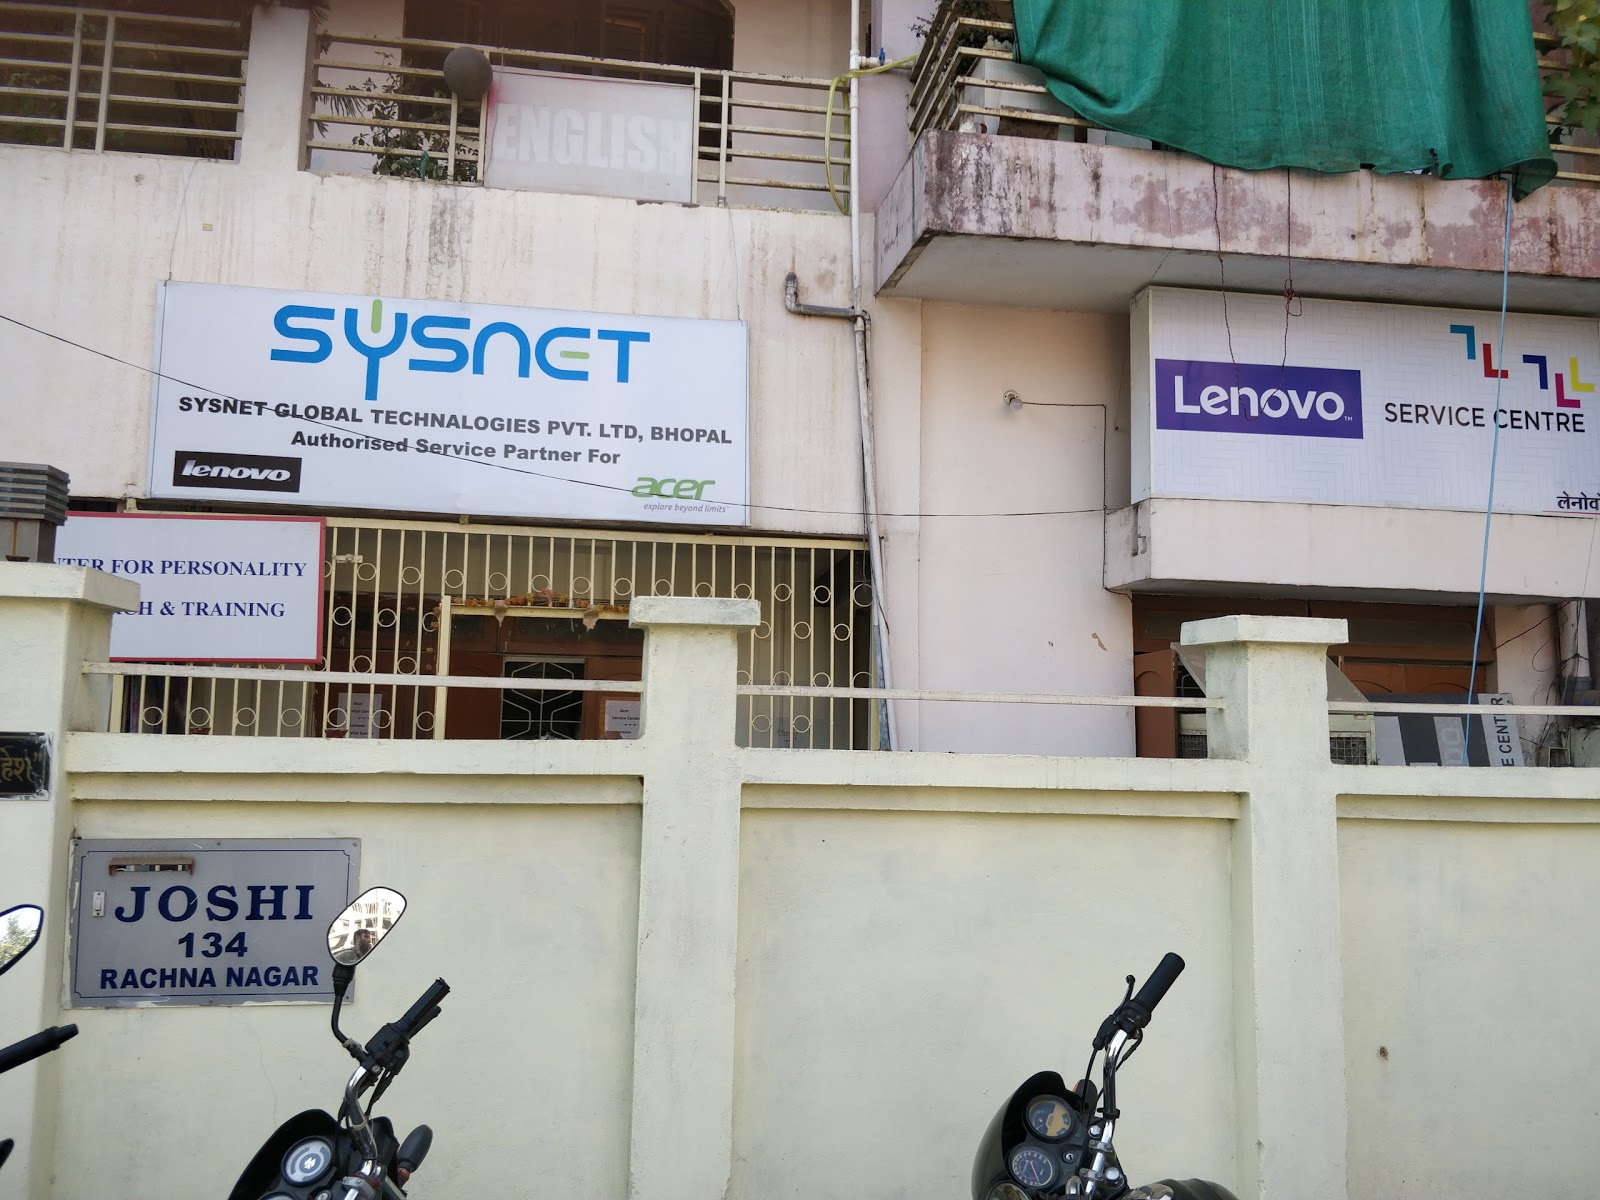 Sysnet Global Technologies